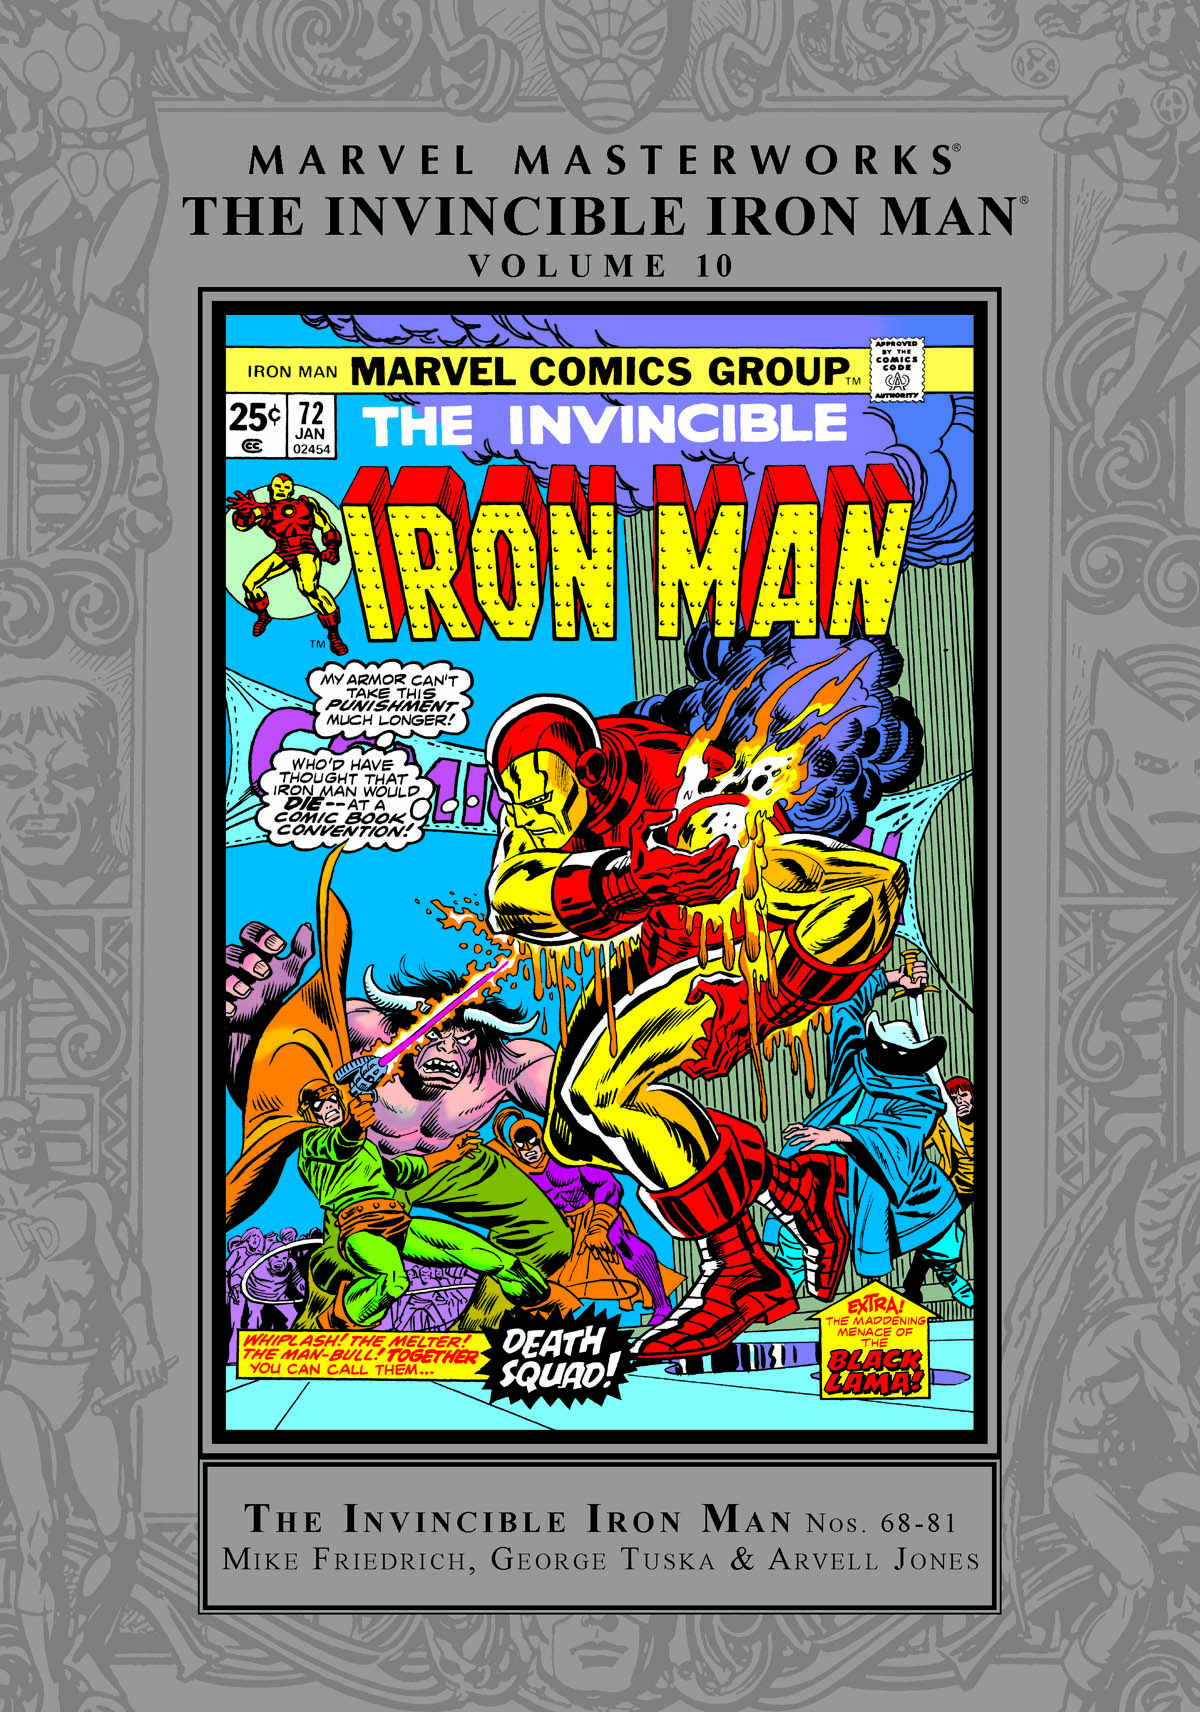 Marvel Masterworks: The Invincible Iron Man Vol. 10 (Trade Paperback)